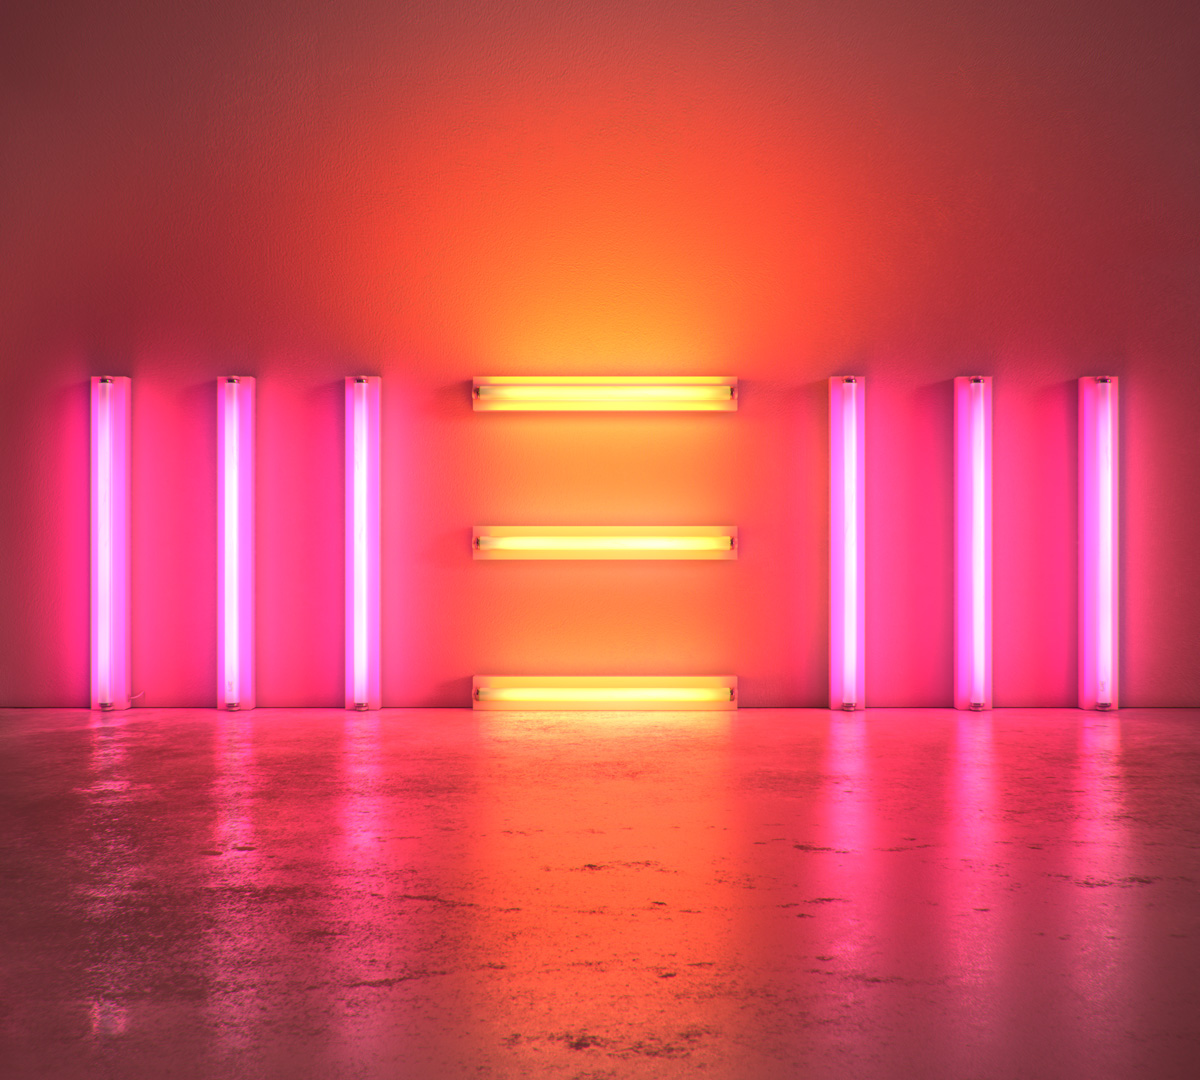 cover of Paul McCartney's "New" album, an arrangement of fluorescent tubes suggesting 'N E W'.